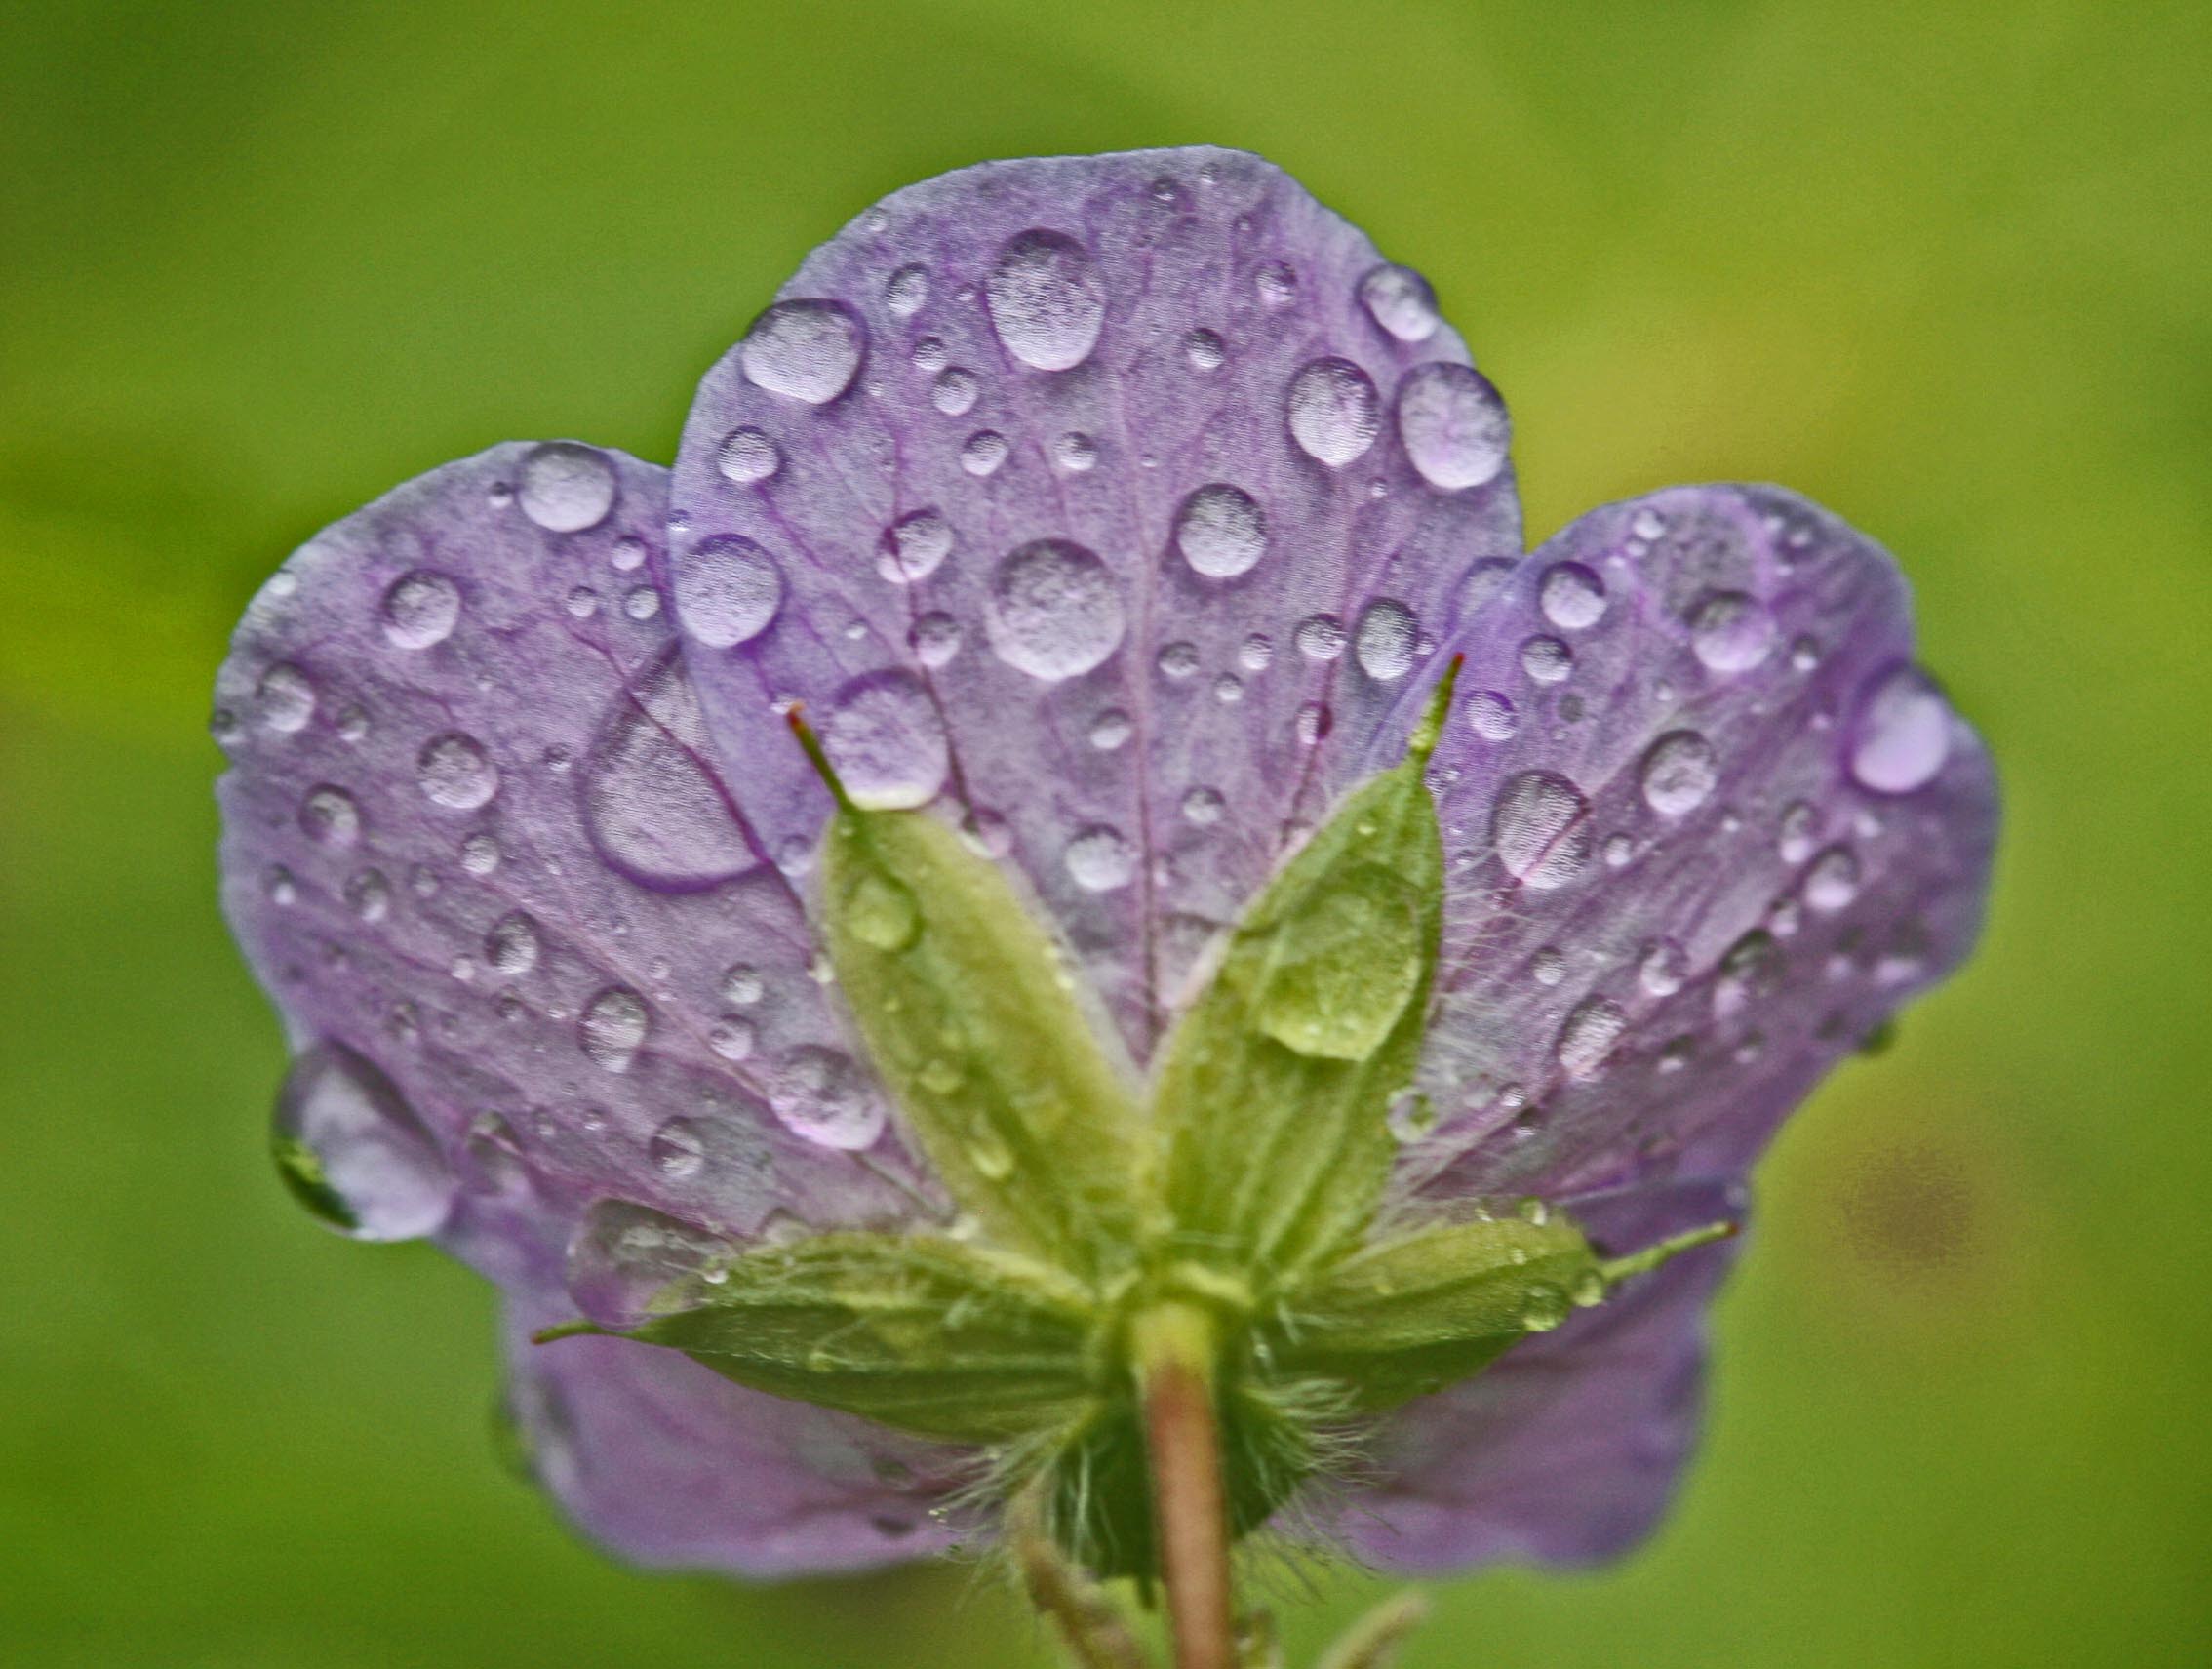 Pristine Raindrops on Rear of Wild Geranium Bloom tb0512ear.jpg